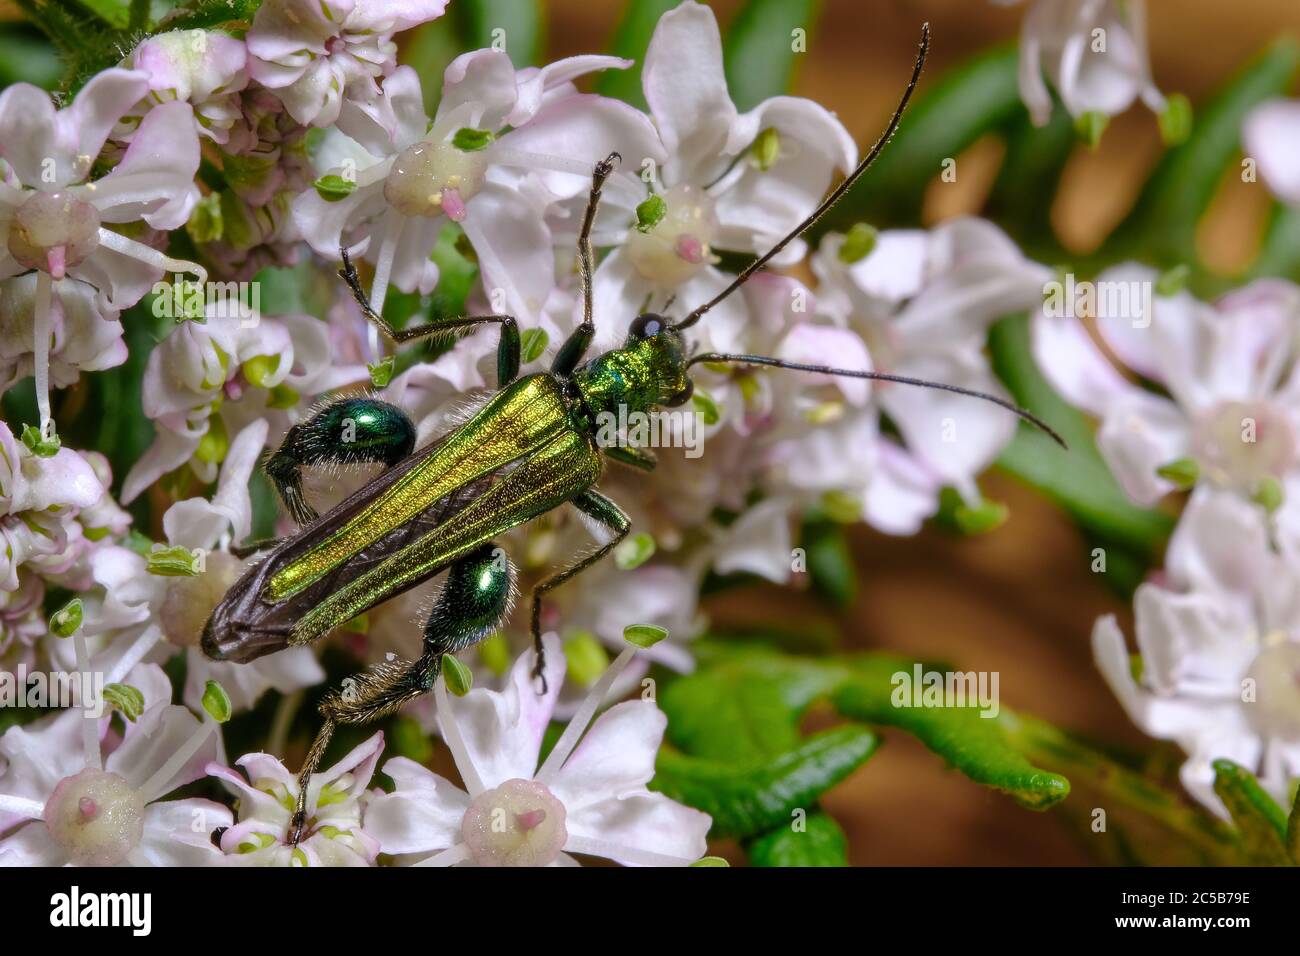 Fiore Thick-Legged Beetle Foto Stock